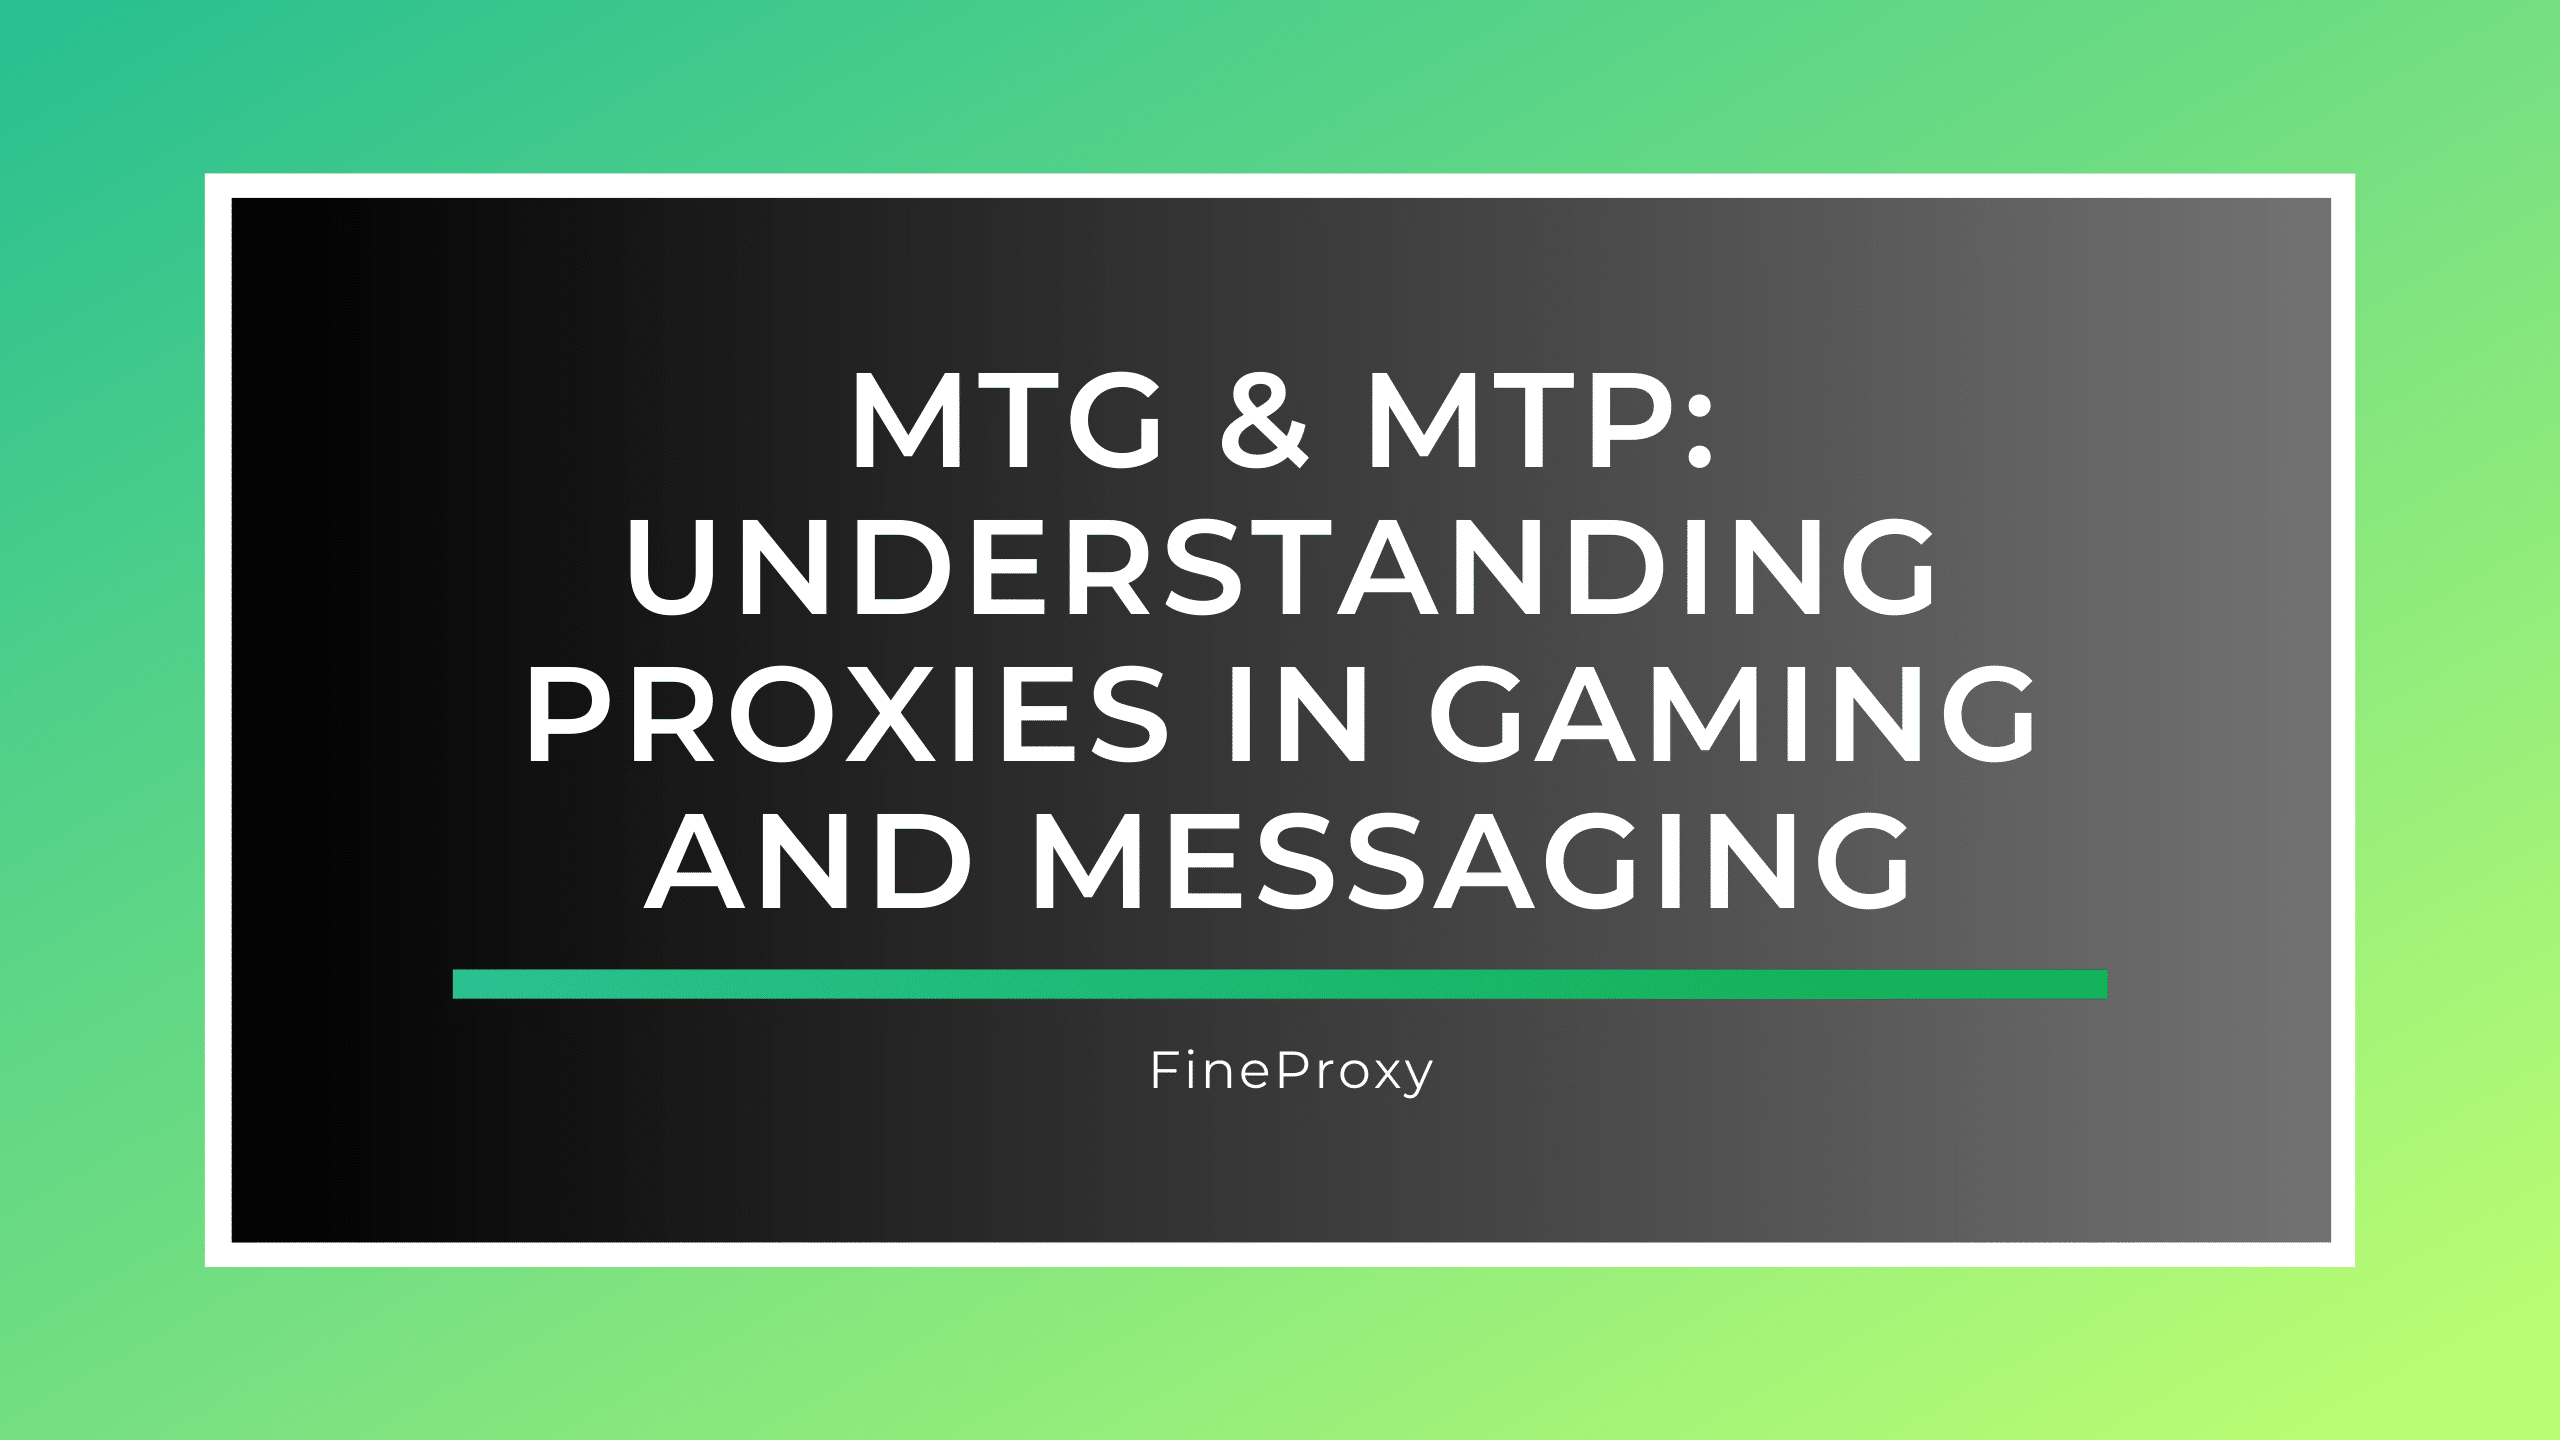 MTG 및 MTP: 게임 및 메시징의 프록시 이해